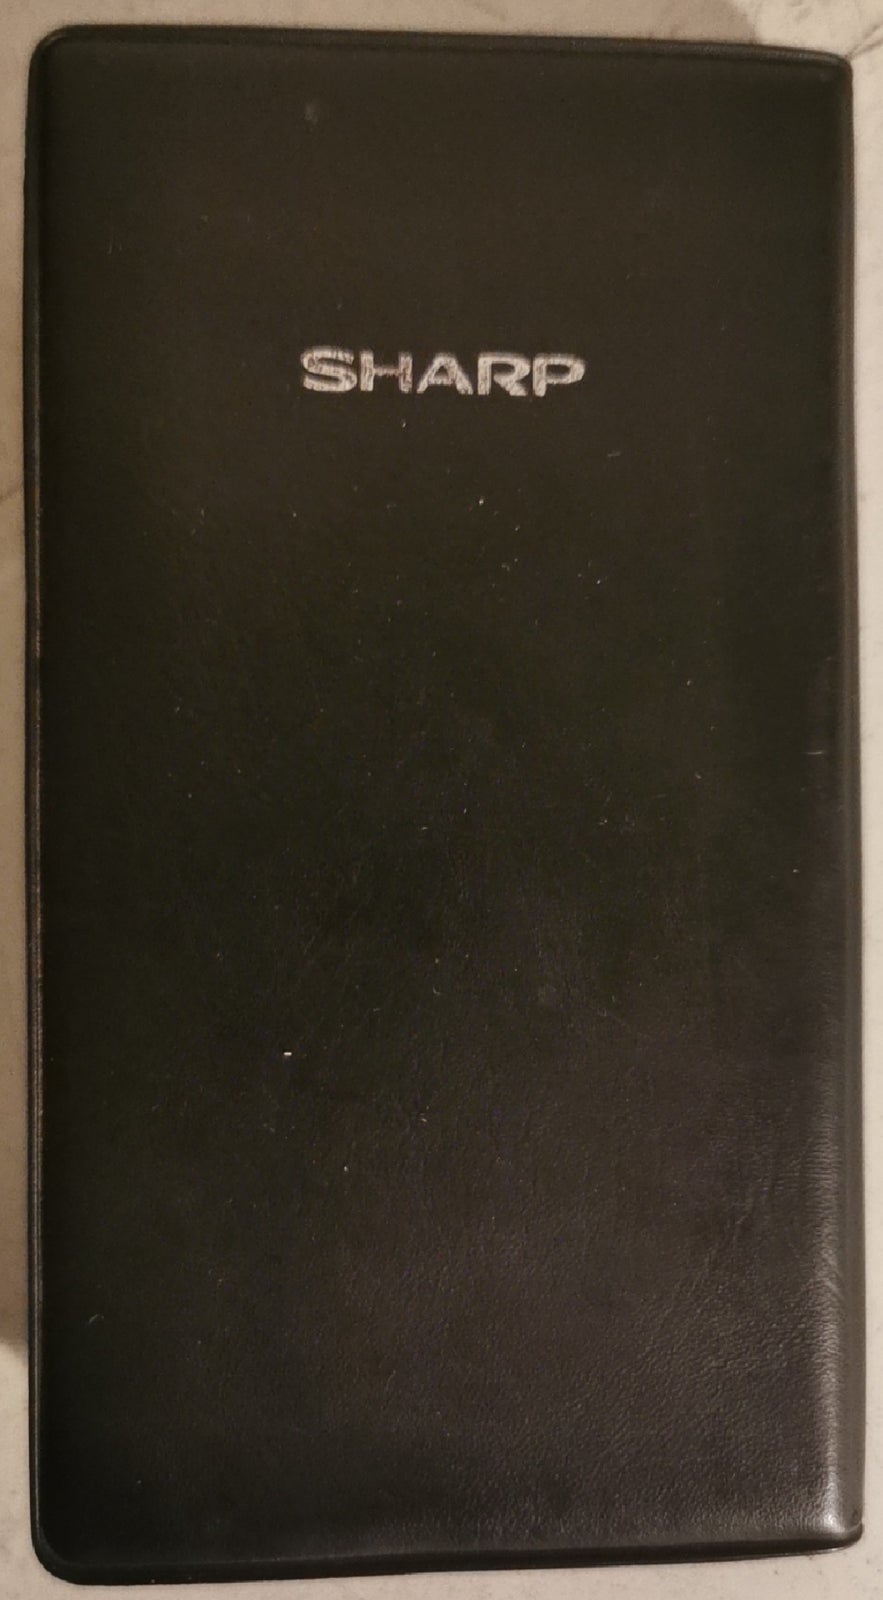 Sharp EL-512